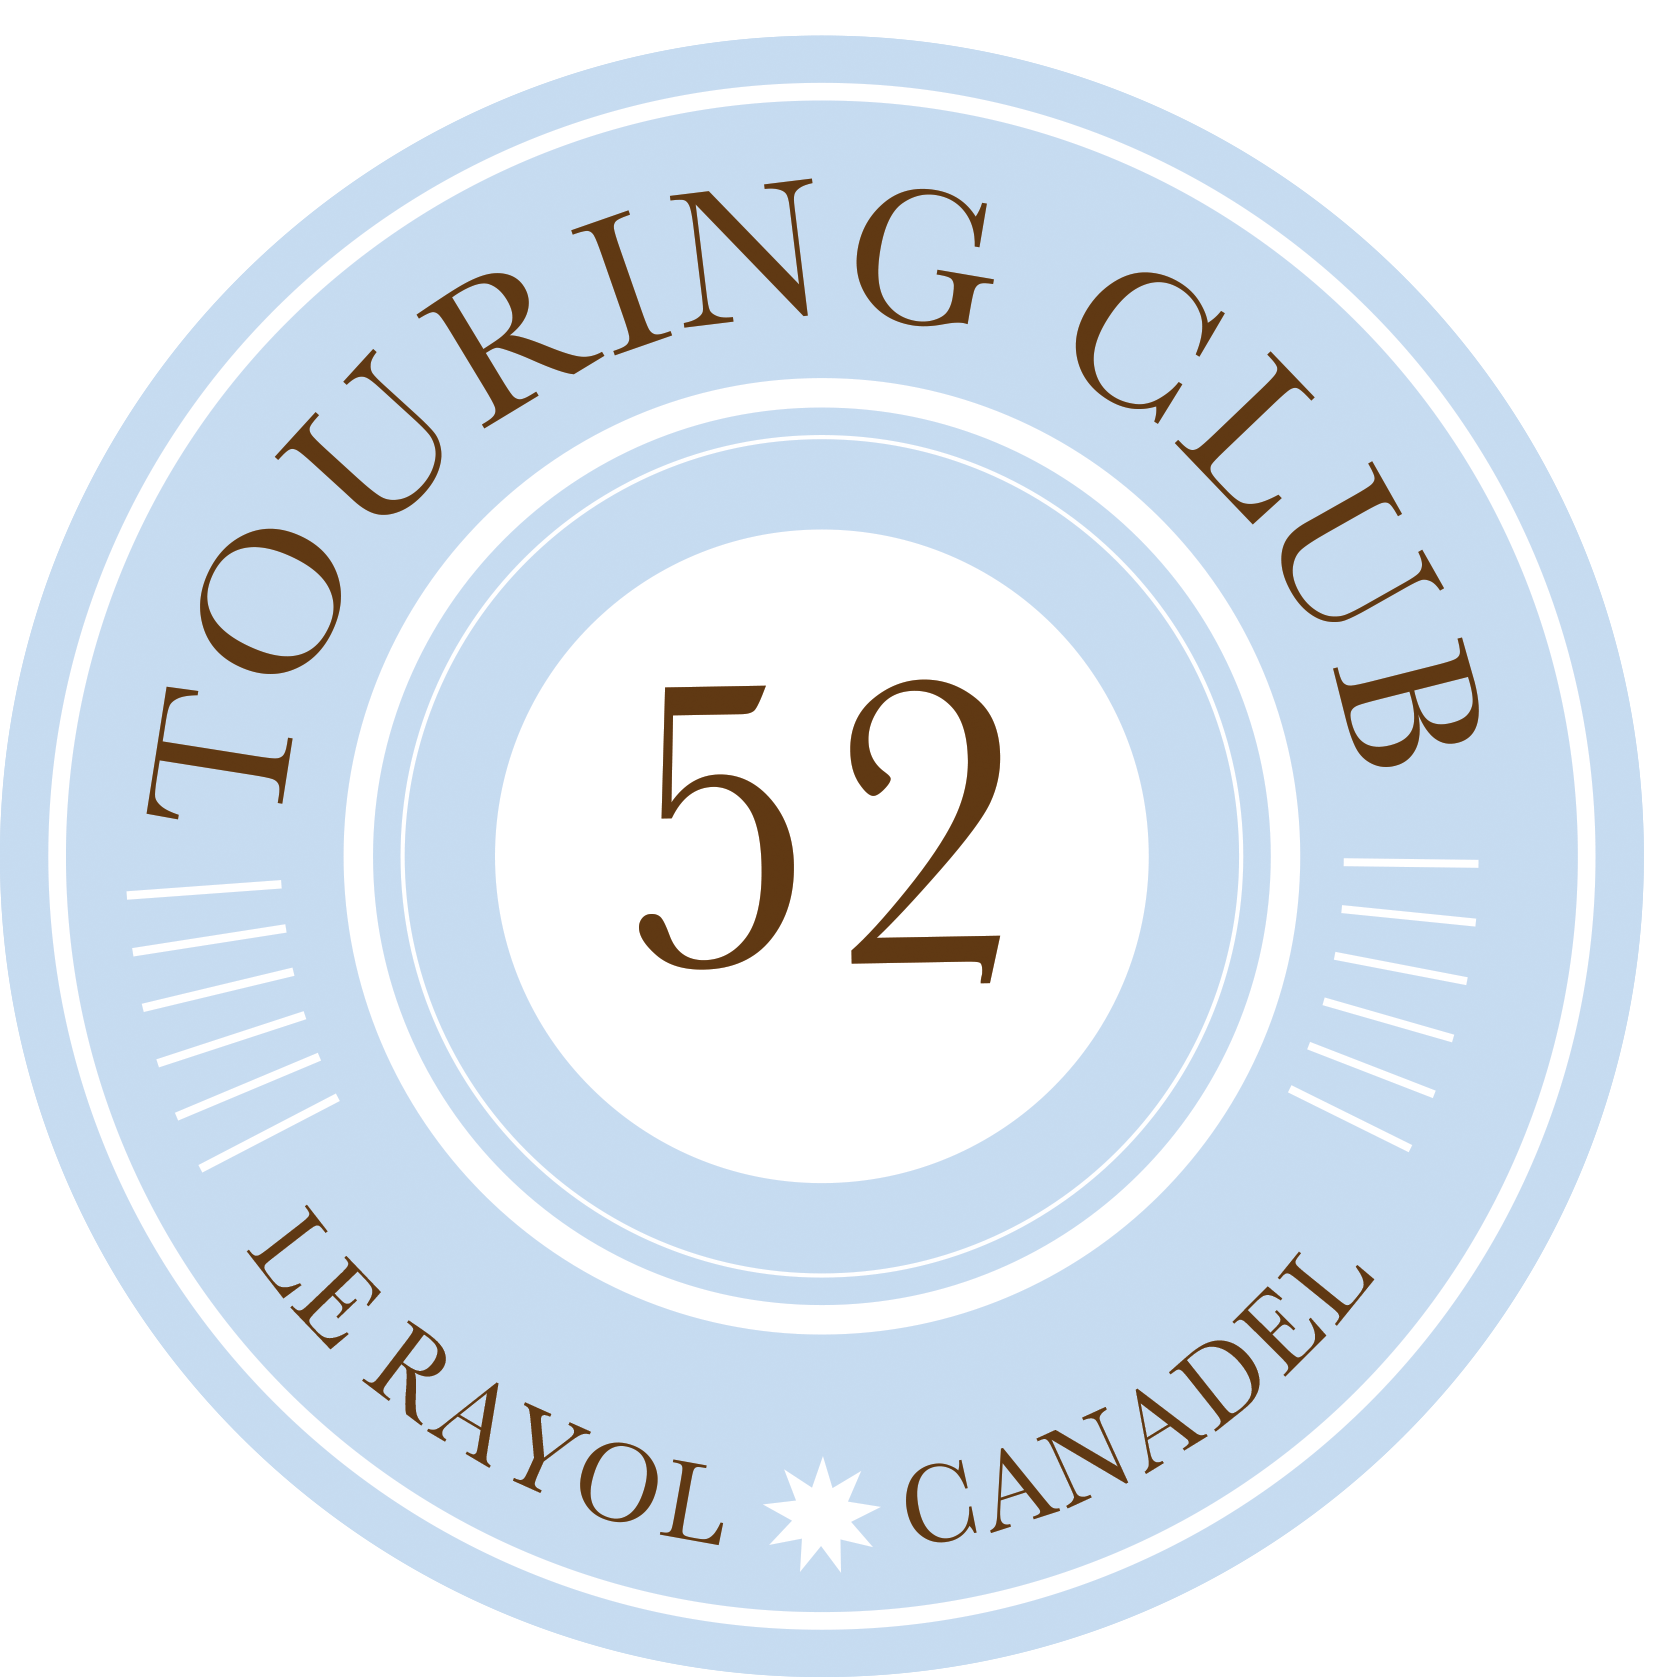 Touring Club 52